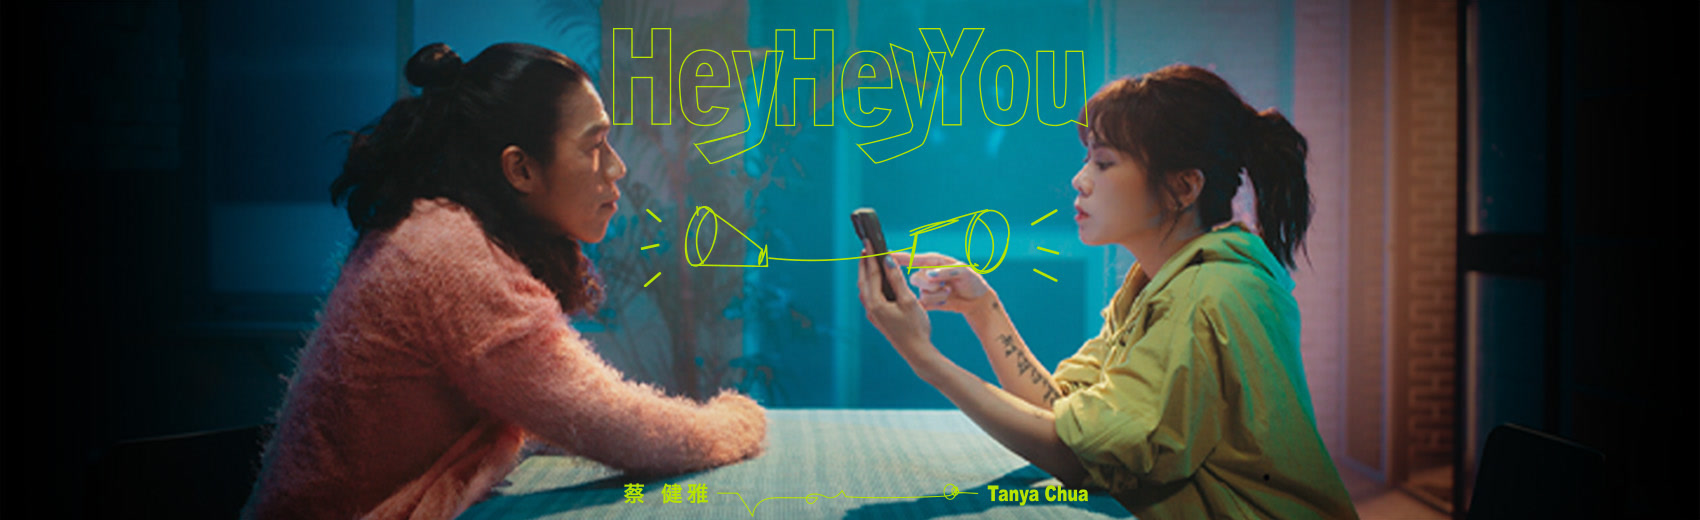 蔡健雅《Hey Hey You》MV